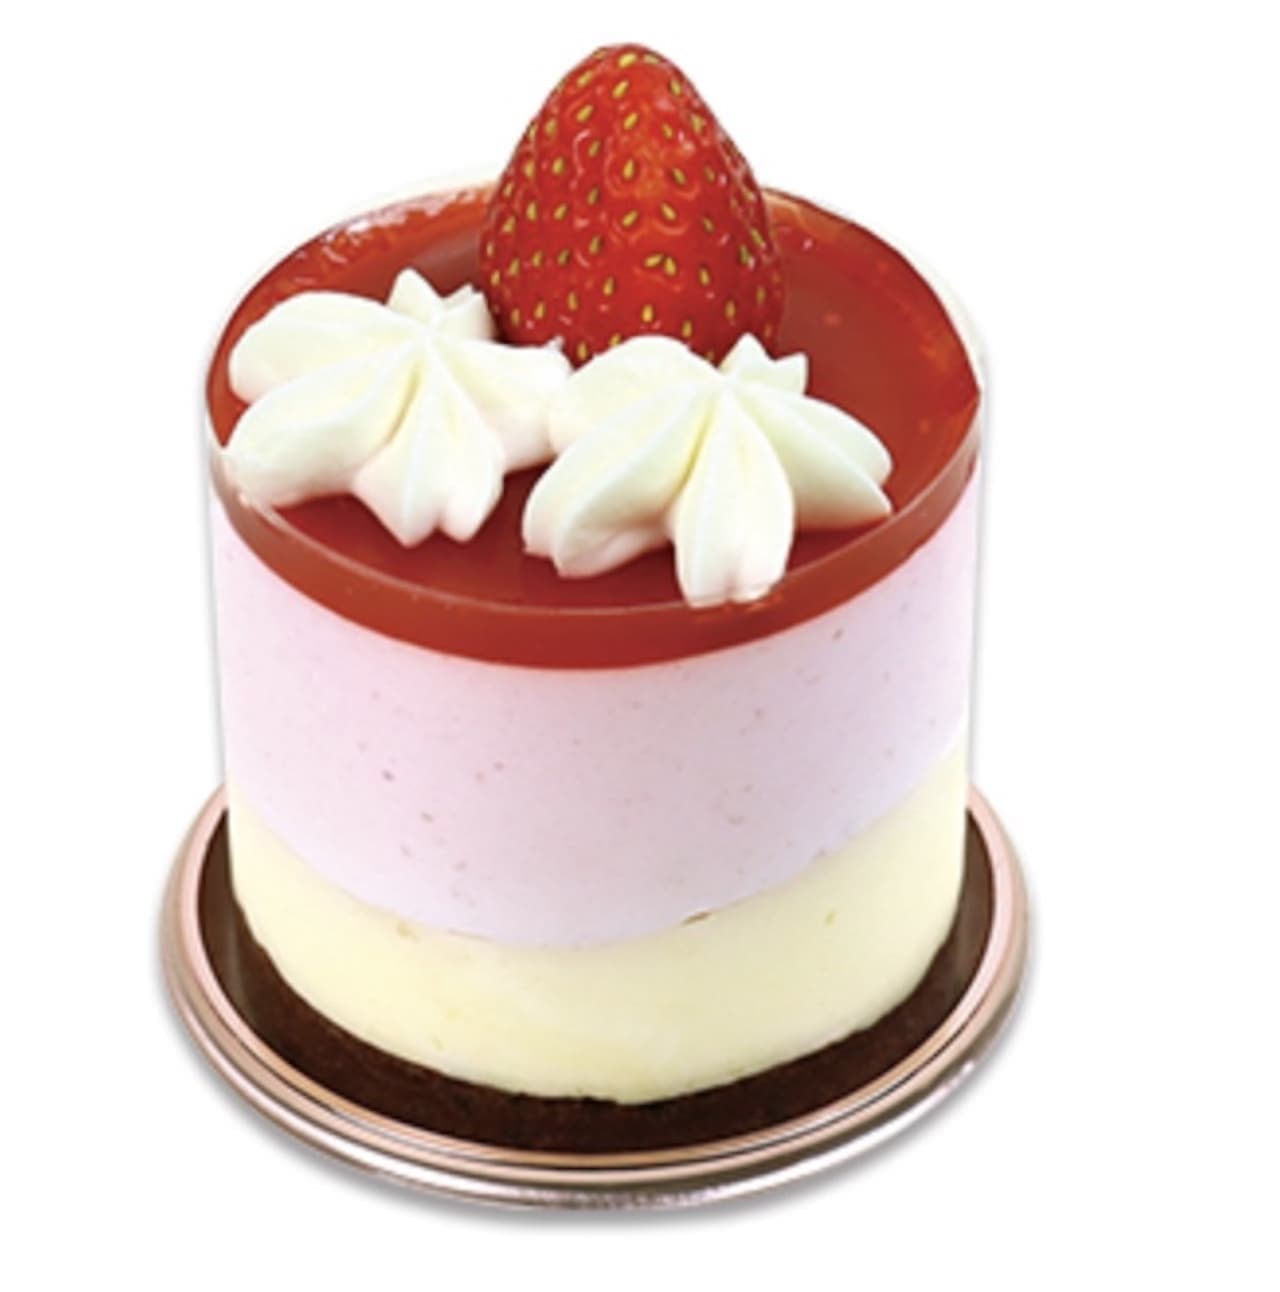 Fujiya "Cherry-scented Strawberry and Vanilla Mousse Cake".